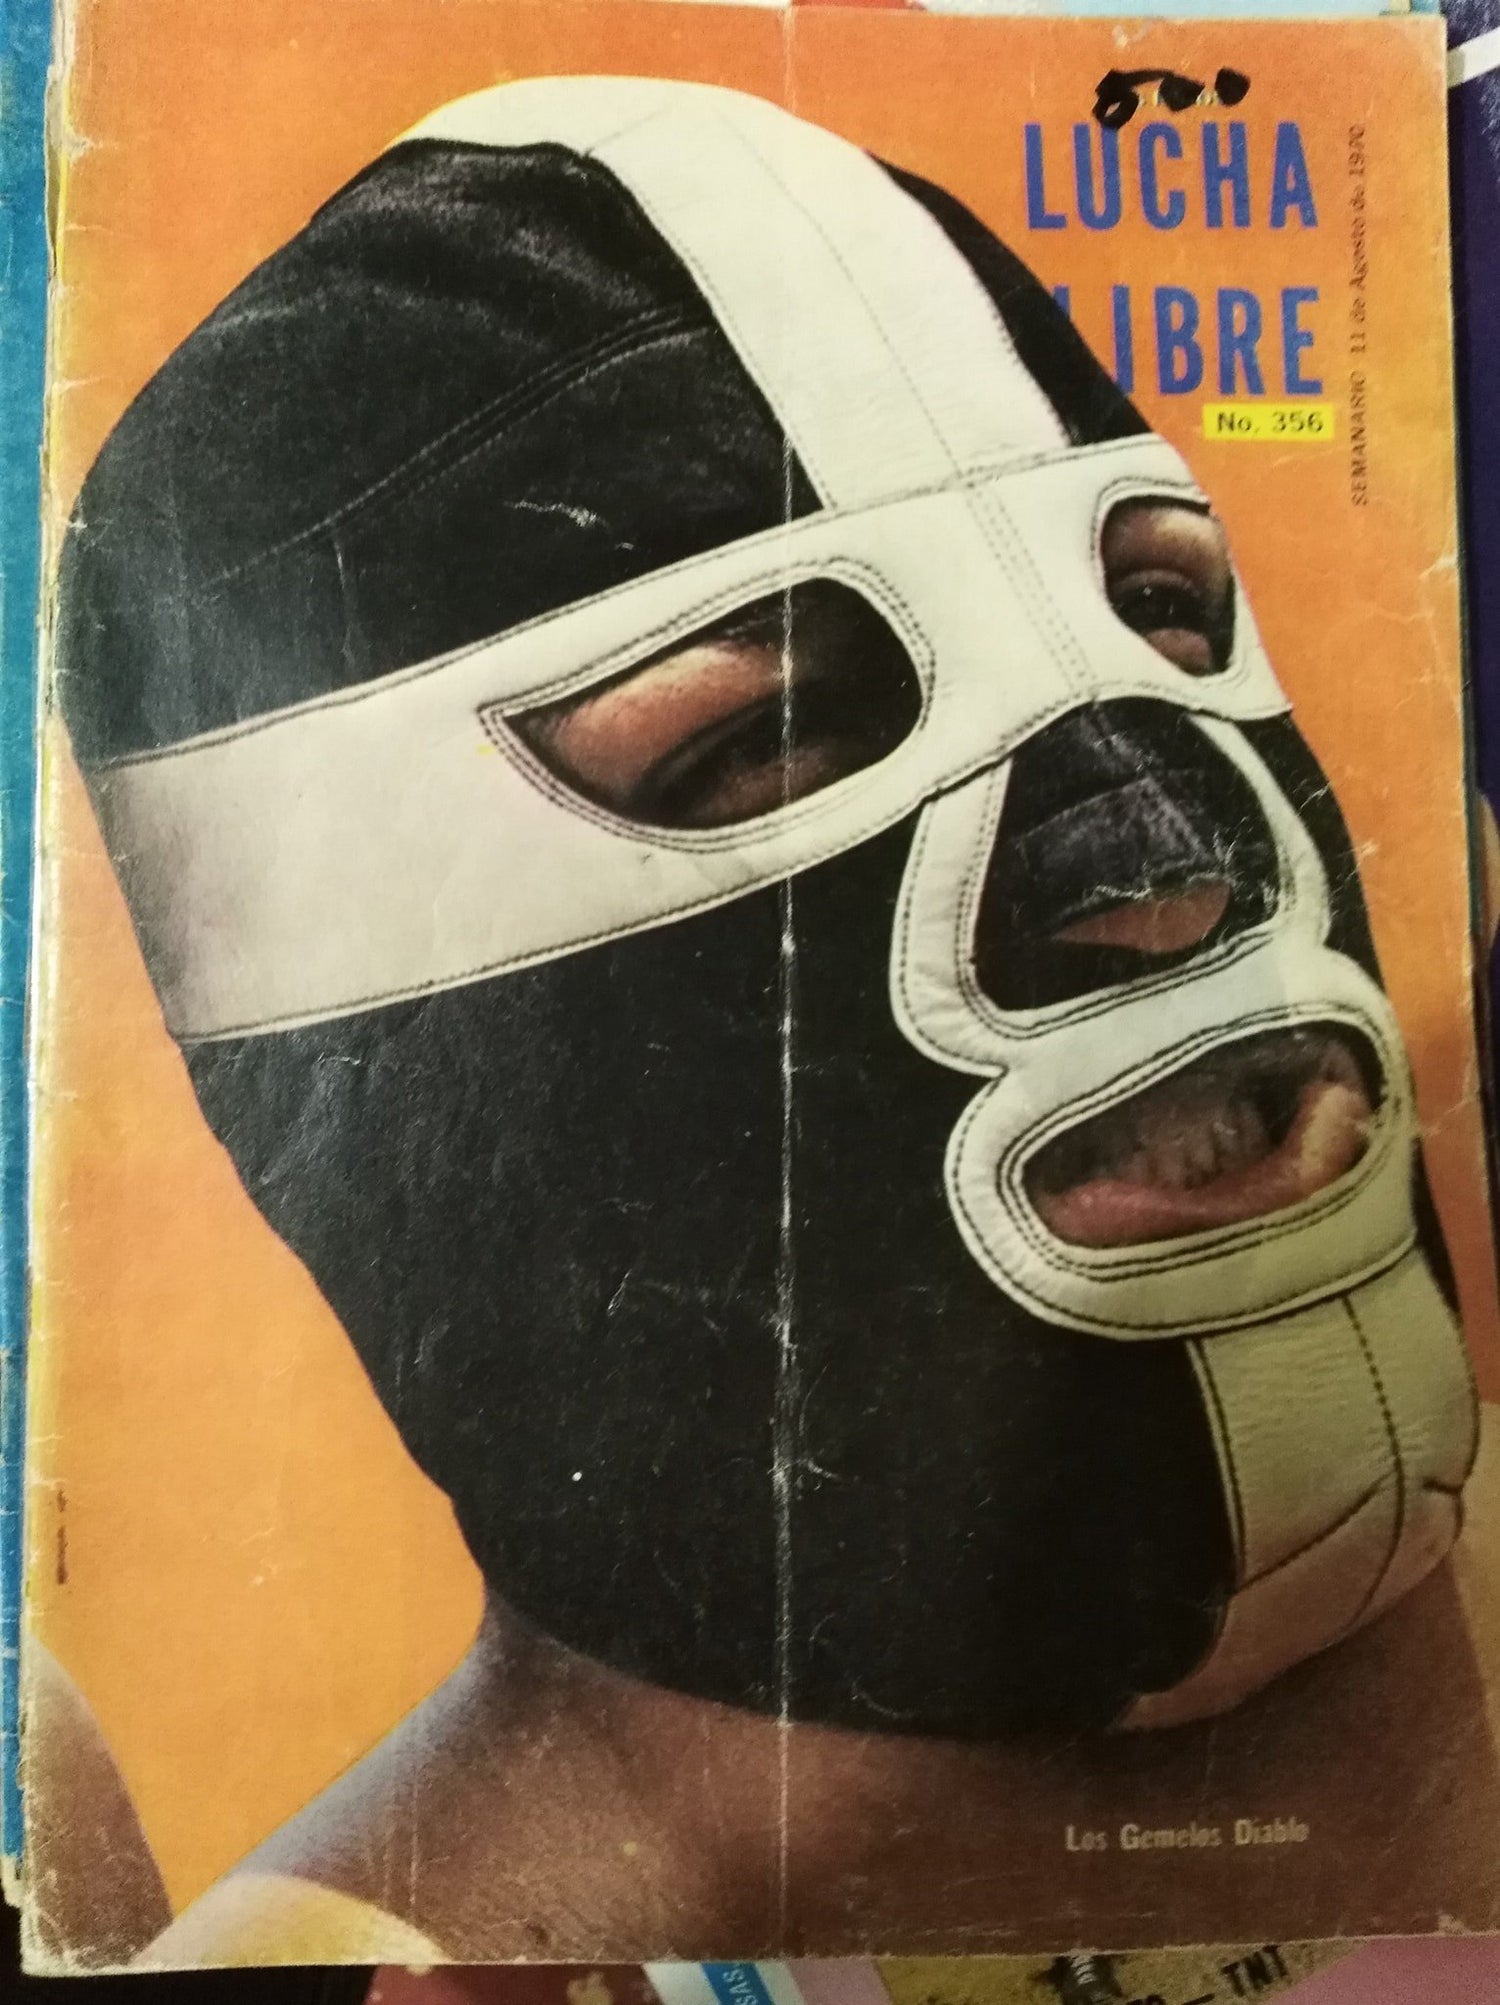 Lucha Libre Volume 356